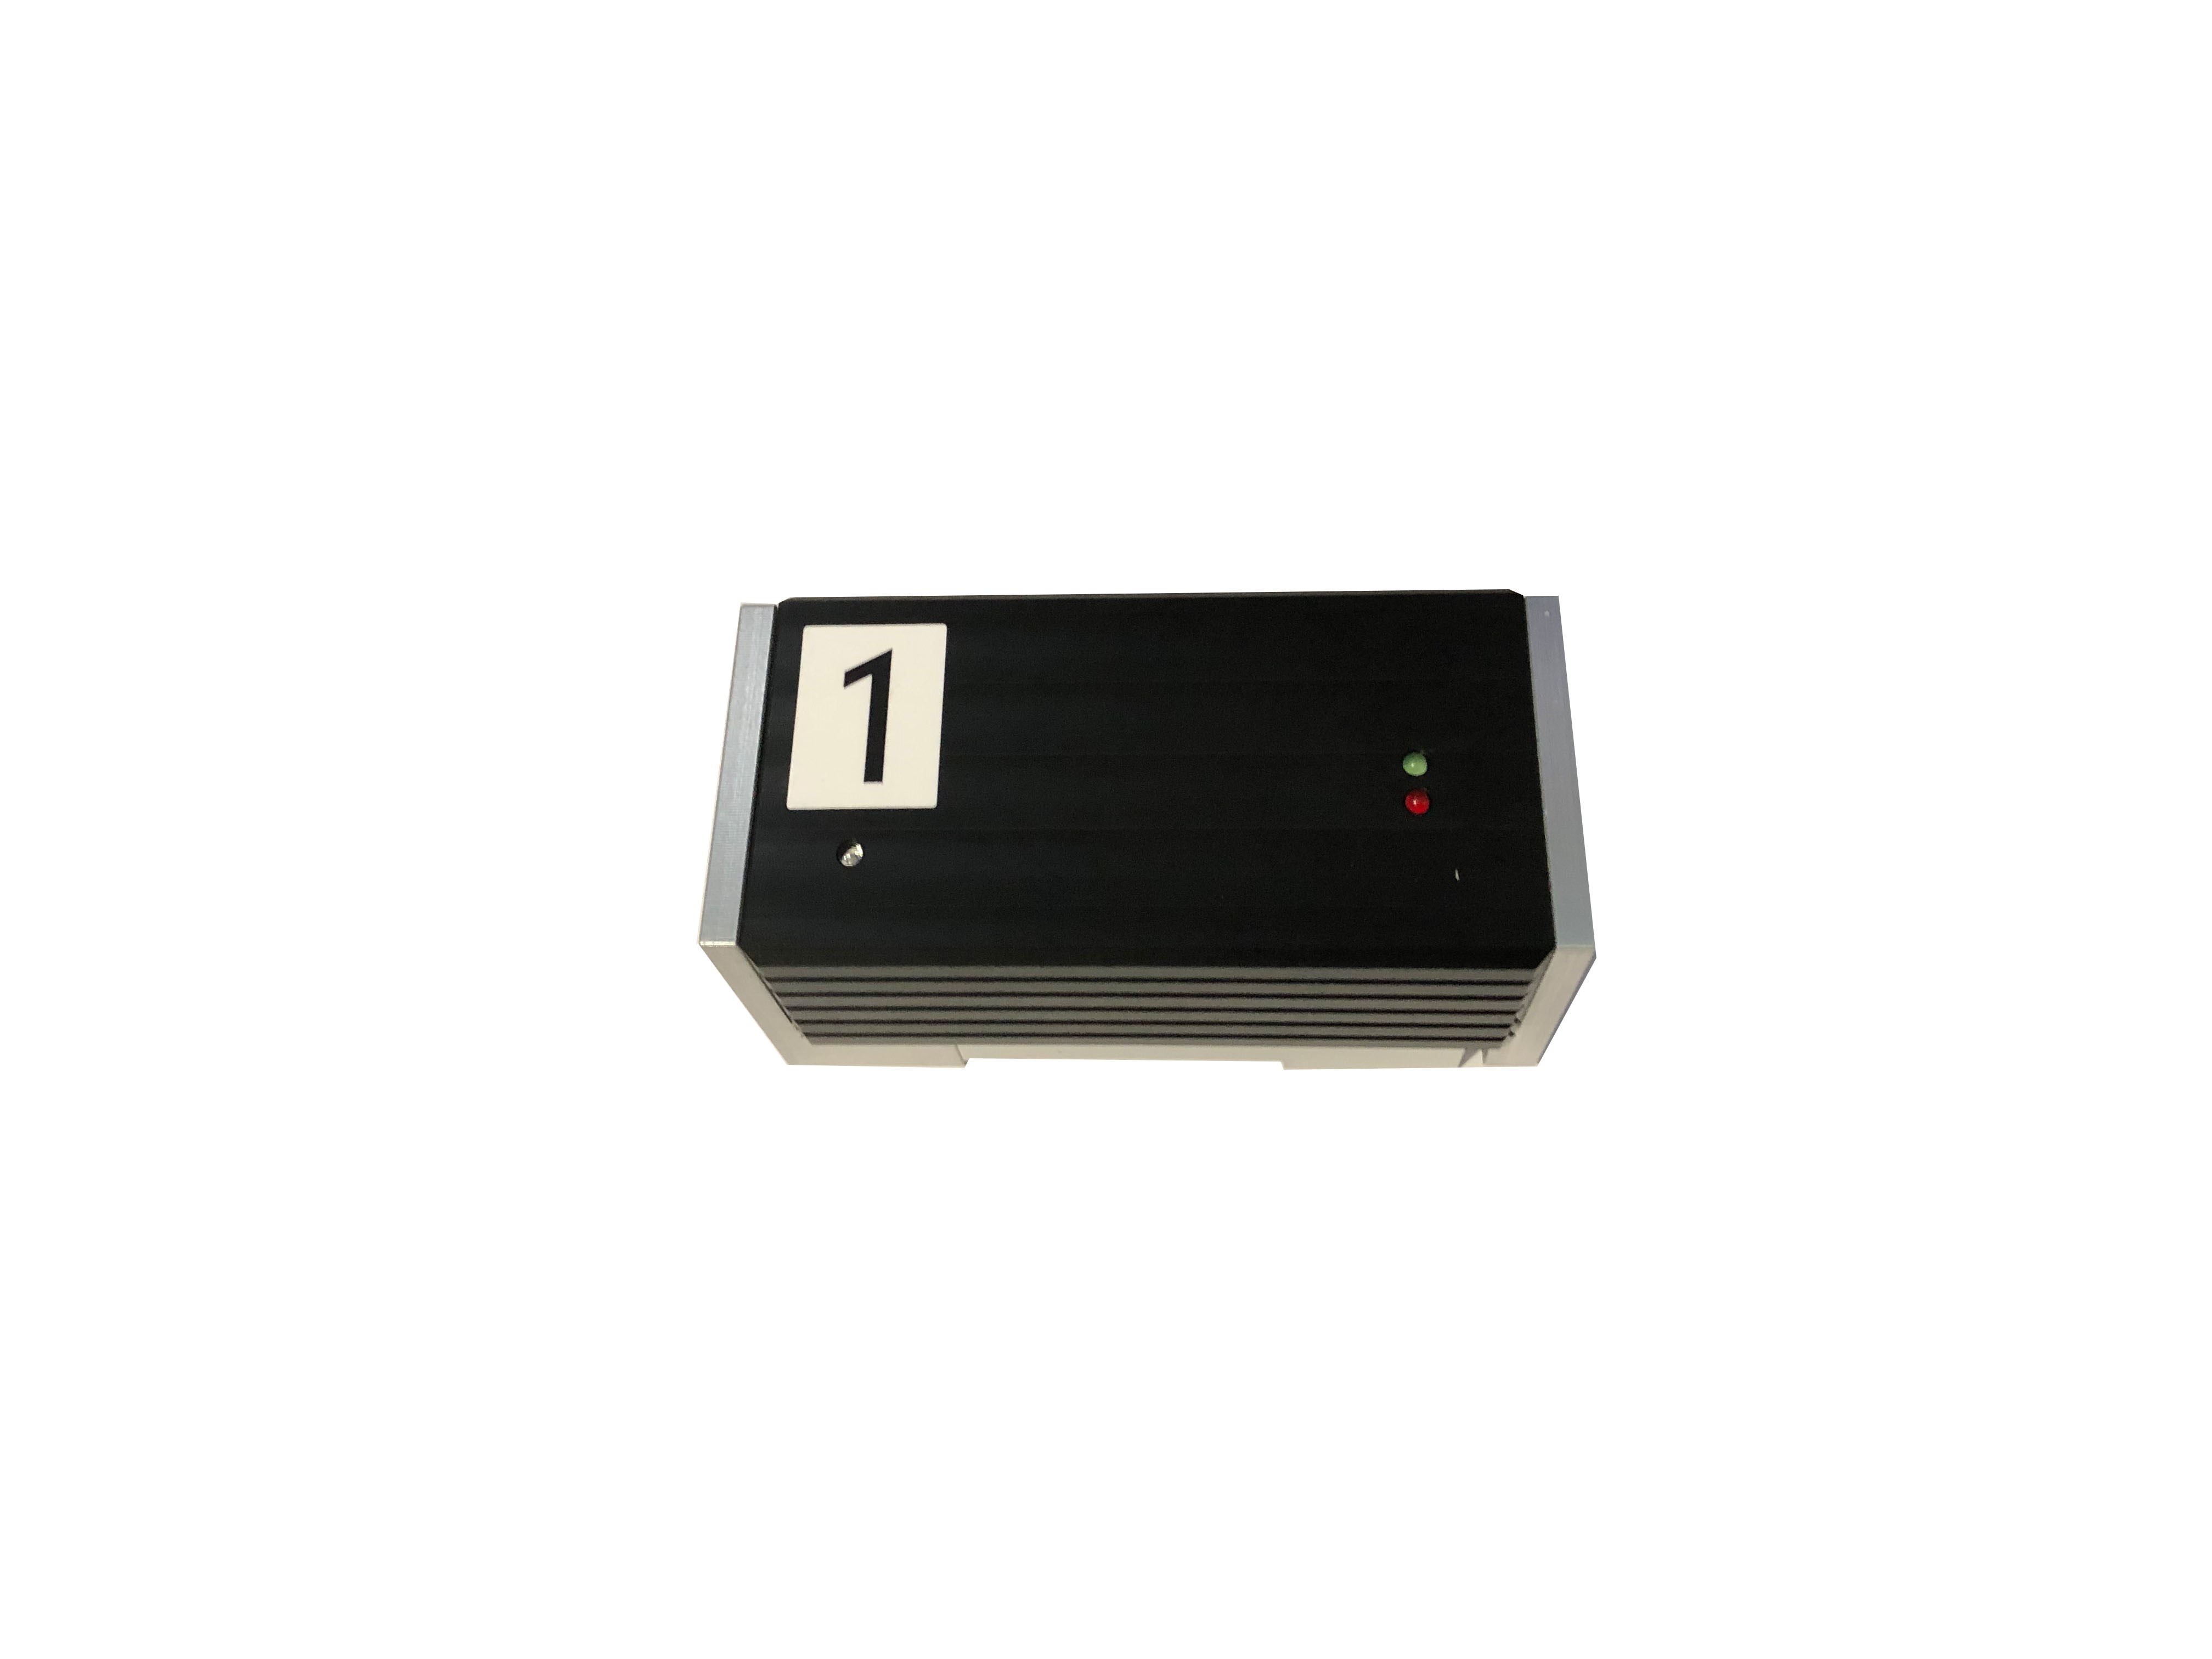 SDM 4000 RS-1 Système intelligent de mesure de barres d'armature sans fil